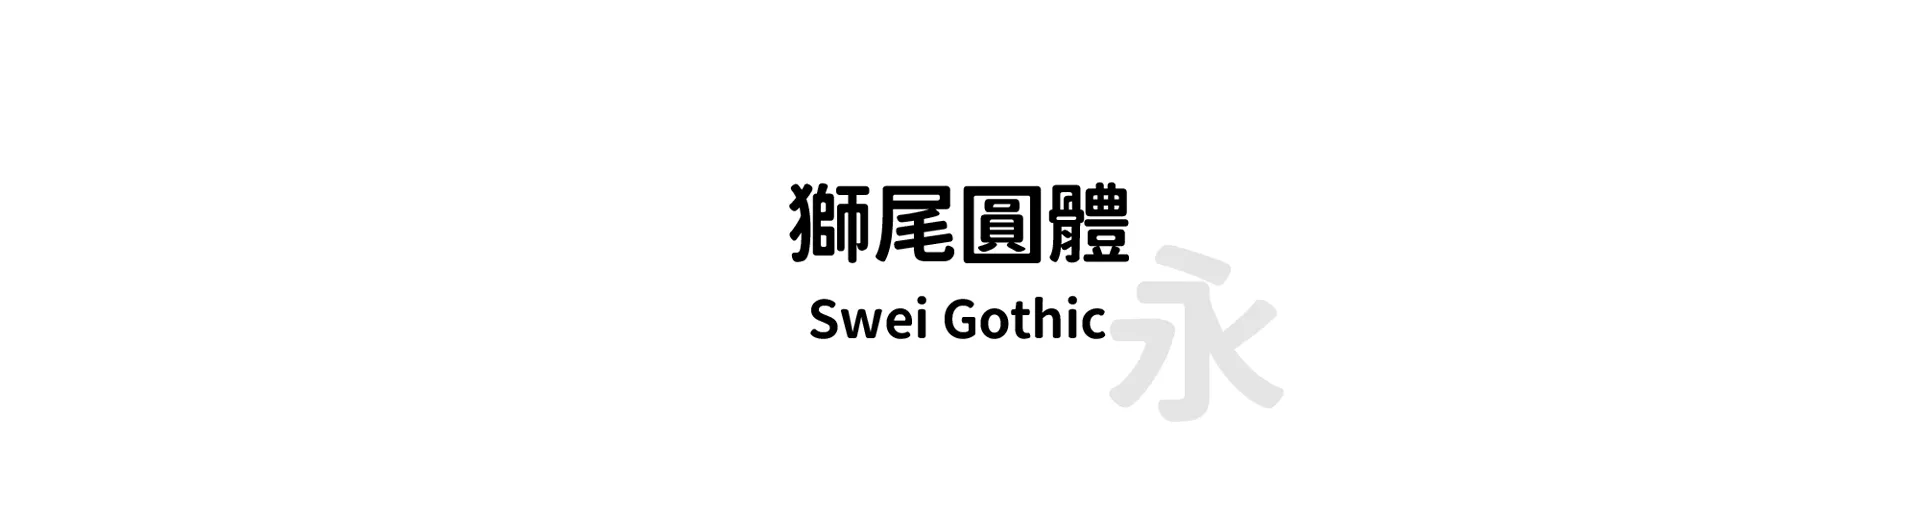 Swei Gothic